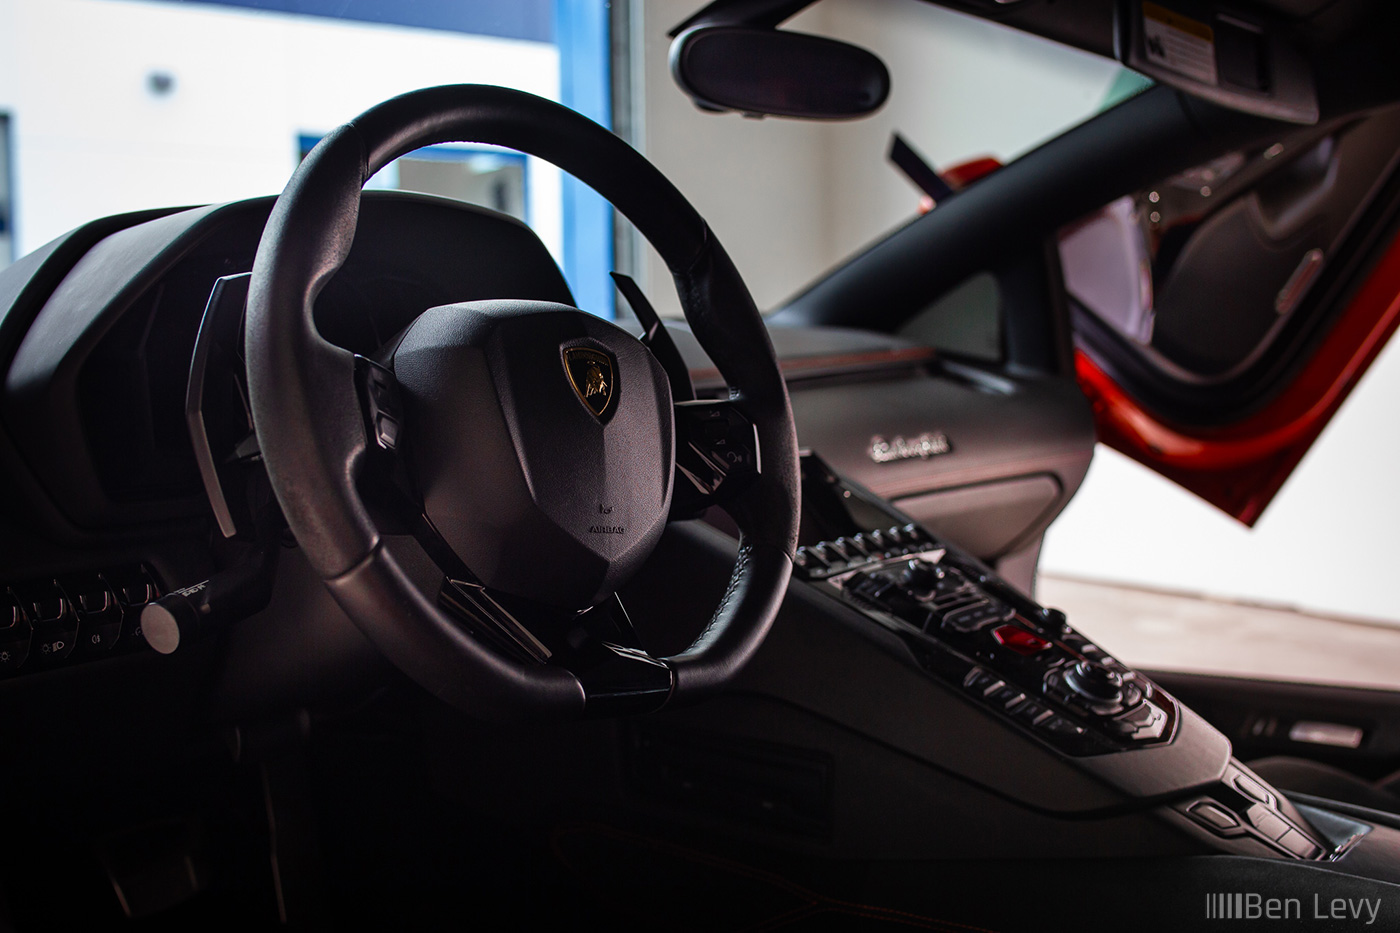 Lamborghini Aventador Steering Wheel